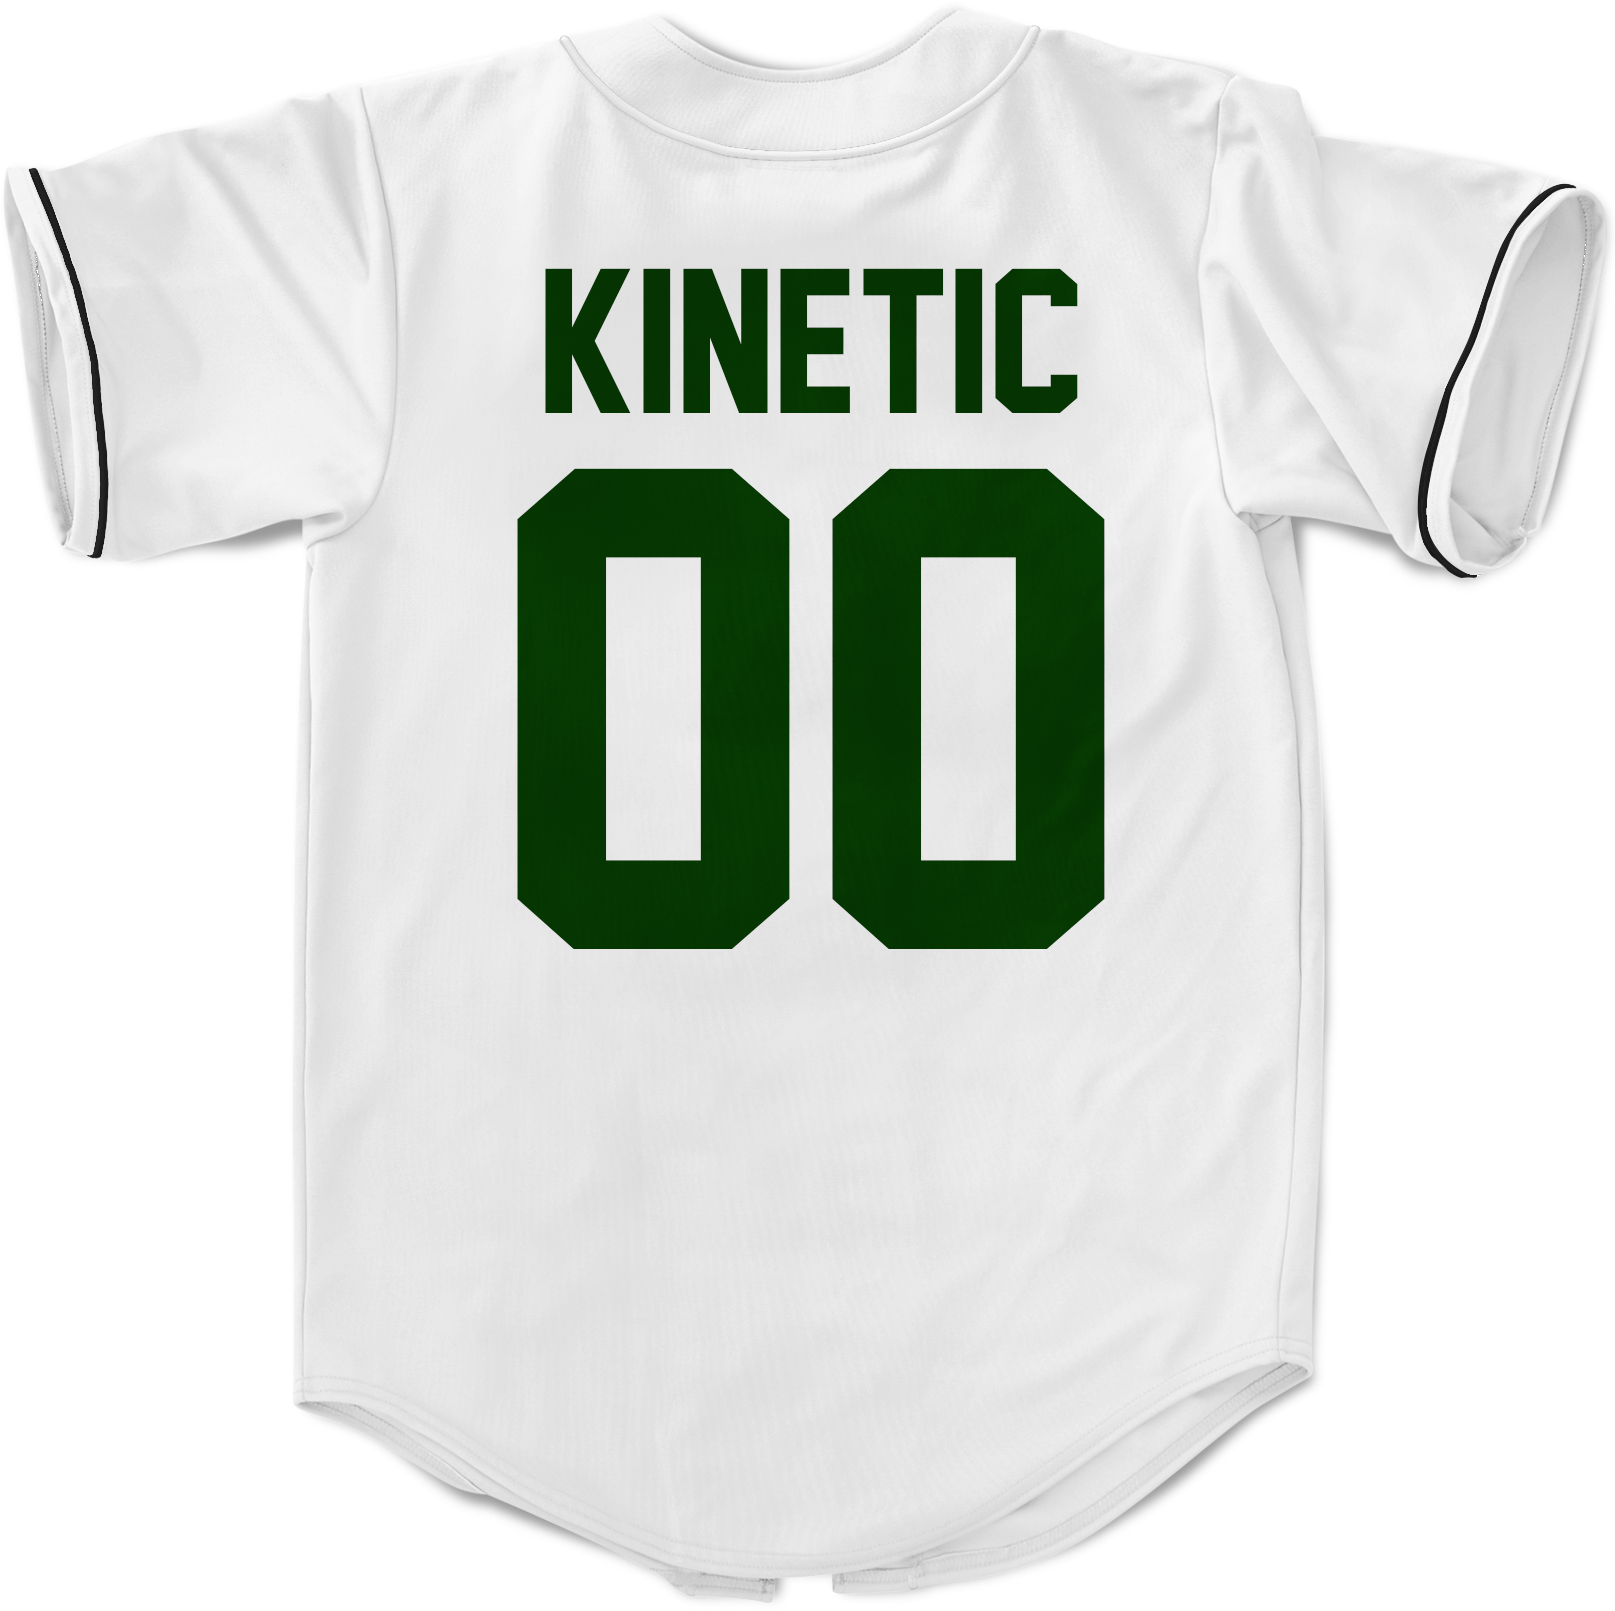 Phi Kappa Sigma - Classic Ballpark Green Baseball Jersey